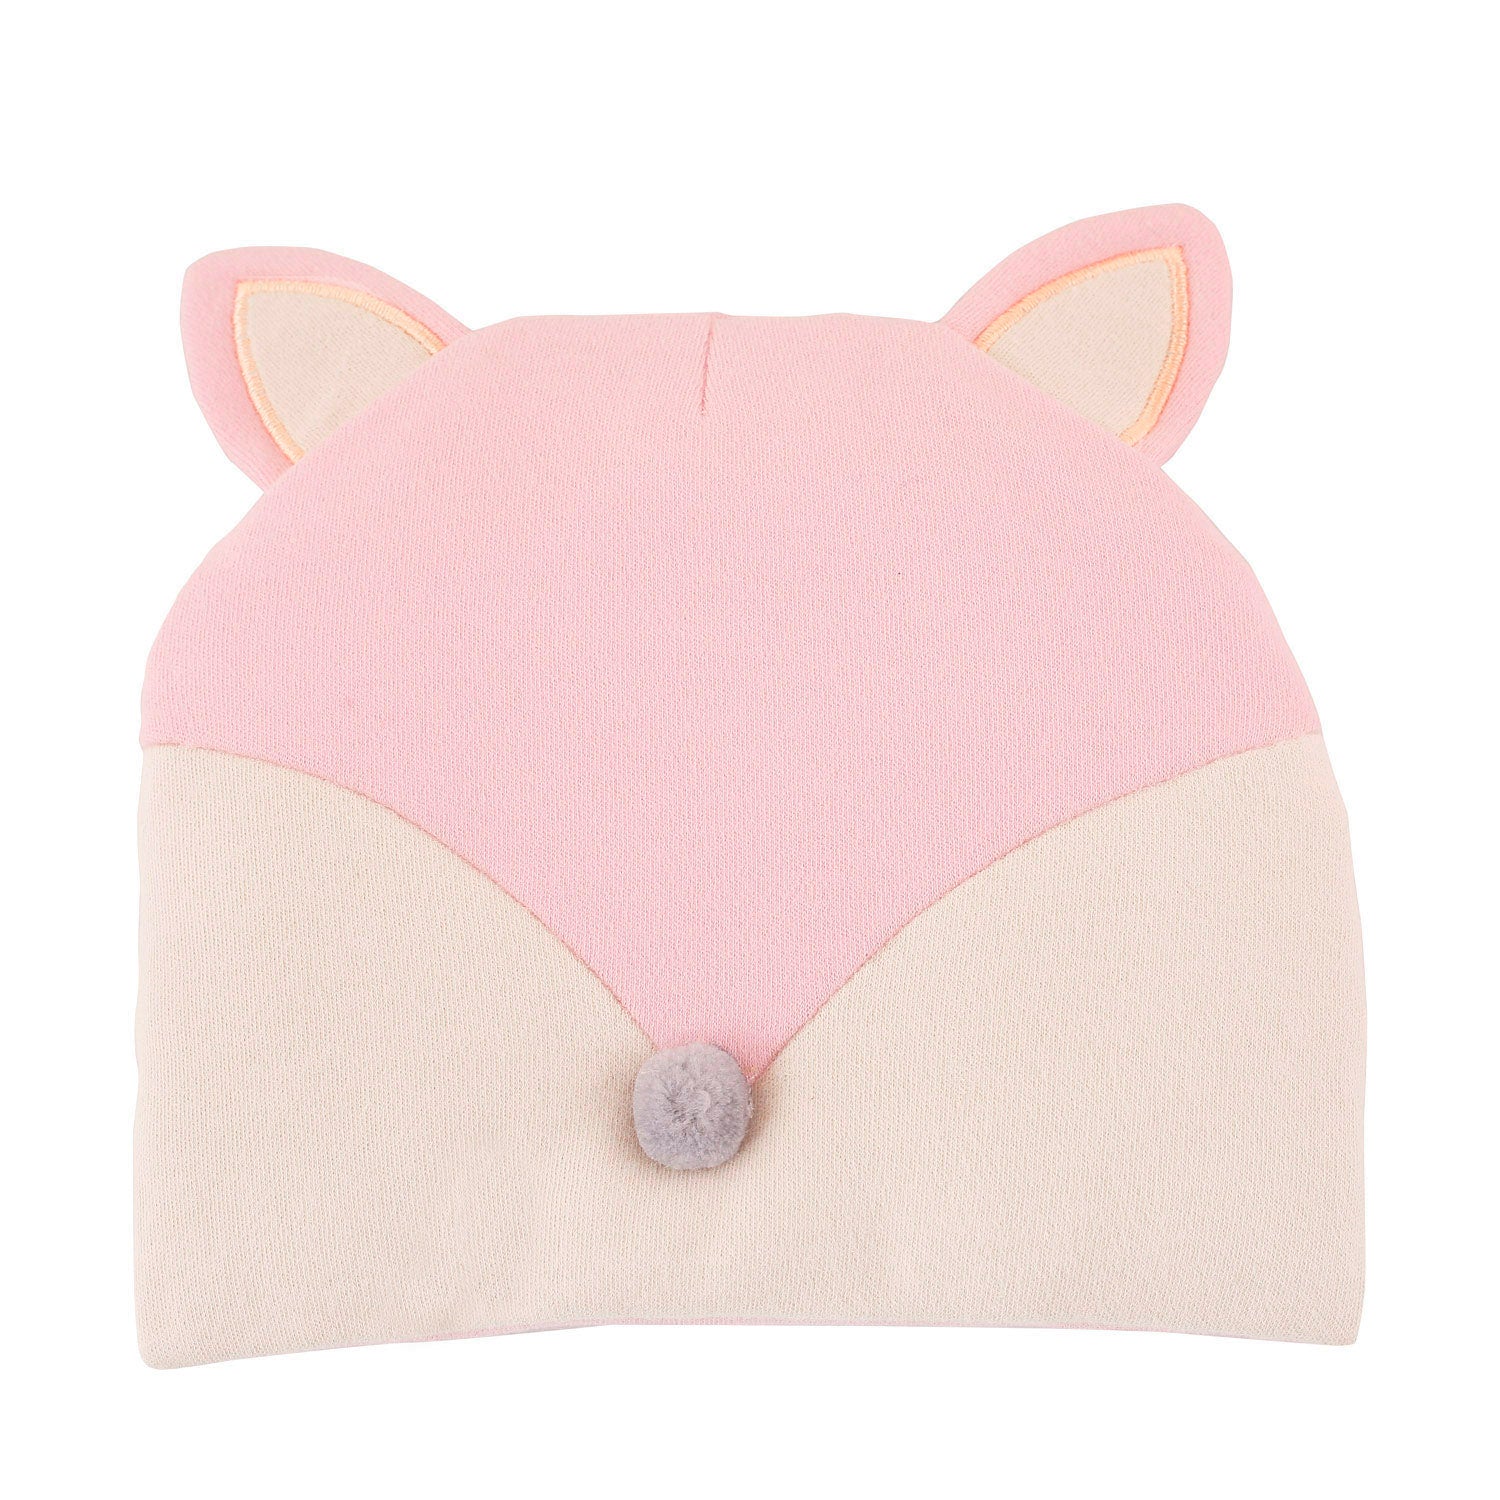 Fox Pink Cap - Baby Moo